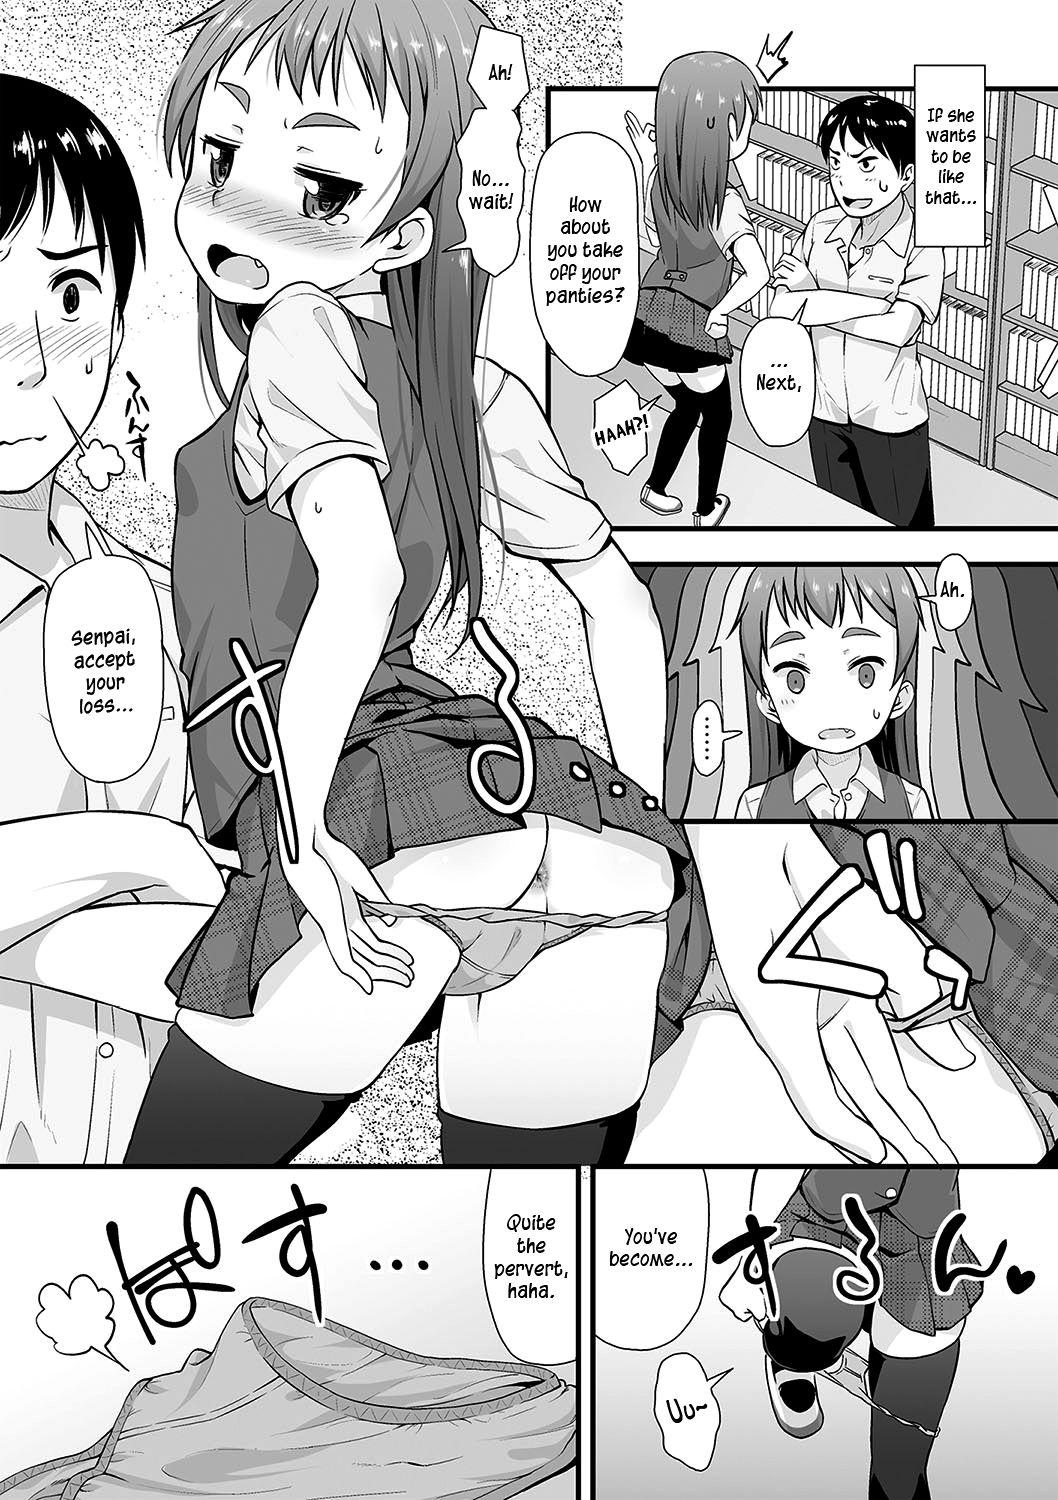 Manga Club Activity Log 6